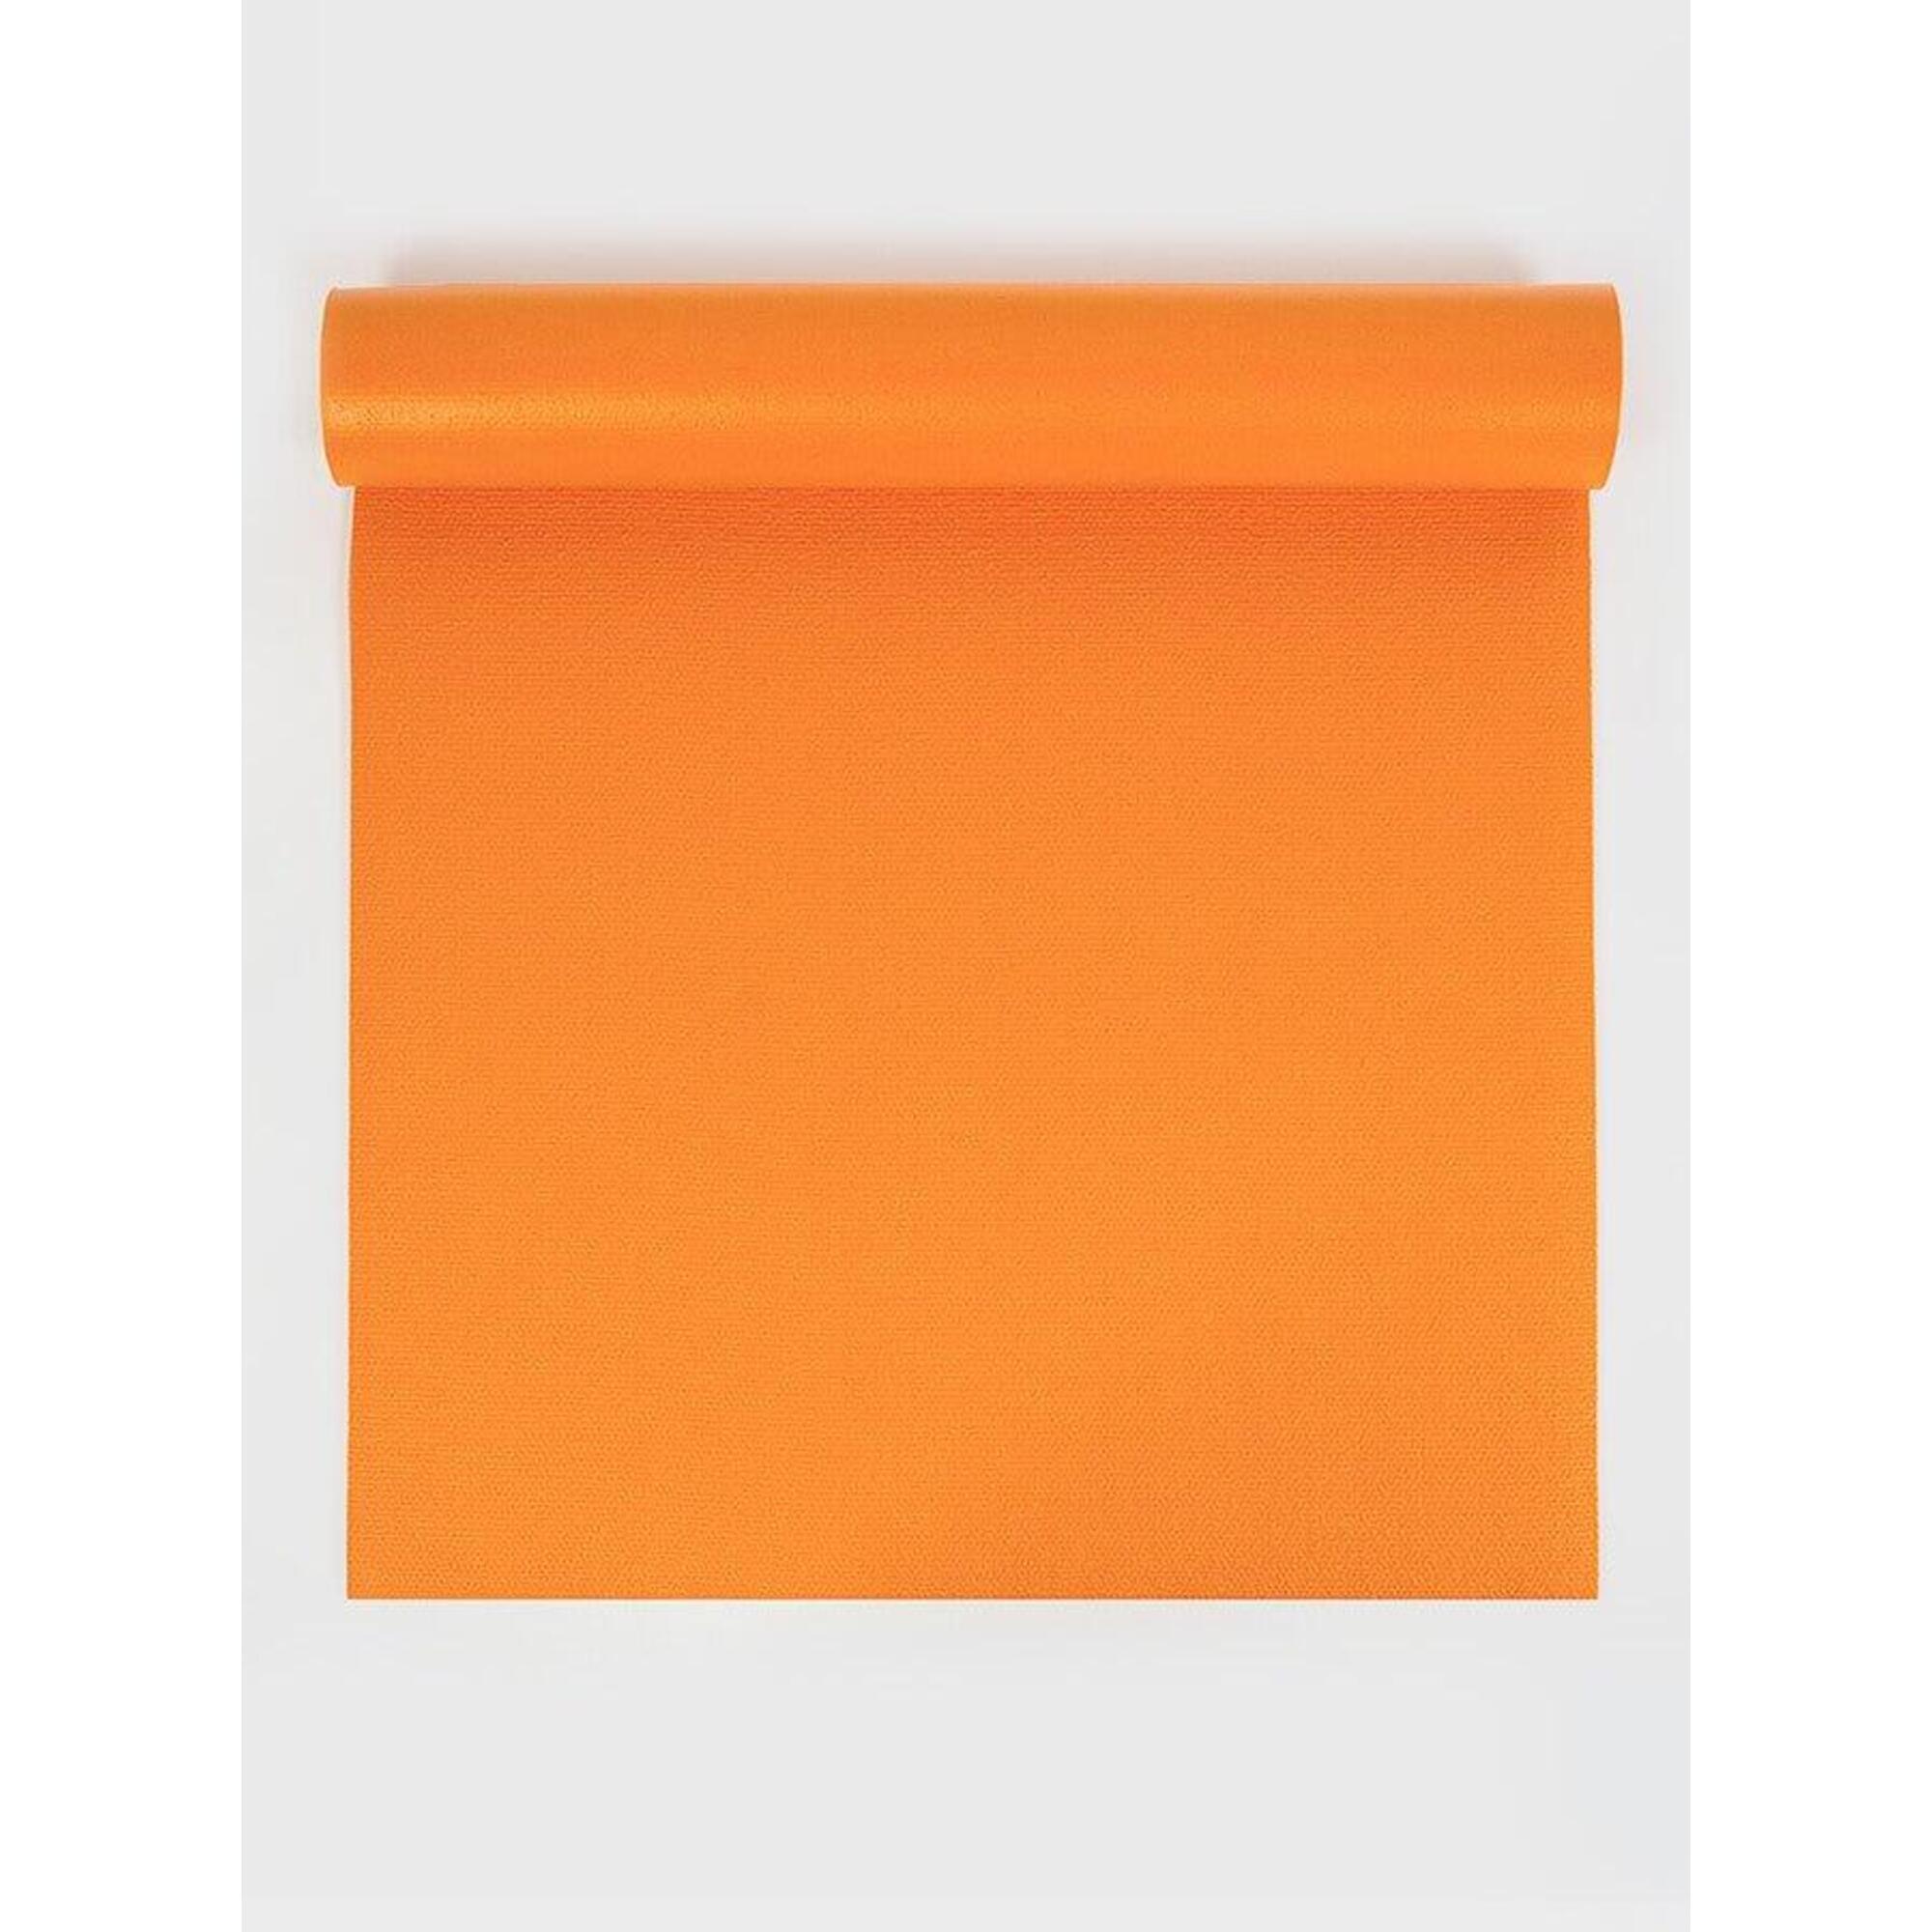 YOGA STUDIO Yoga Studio Oeko-Tex Kids Sticky Yoga Mat 4.5mm - Tangerine Orange